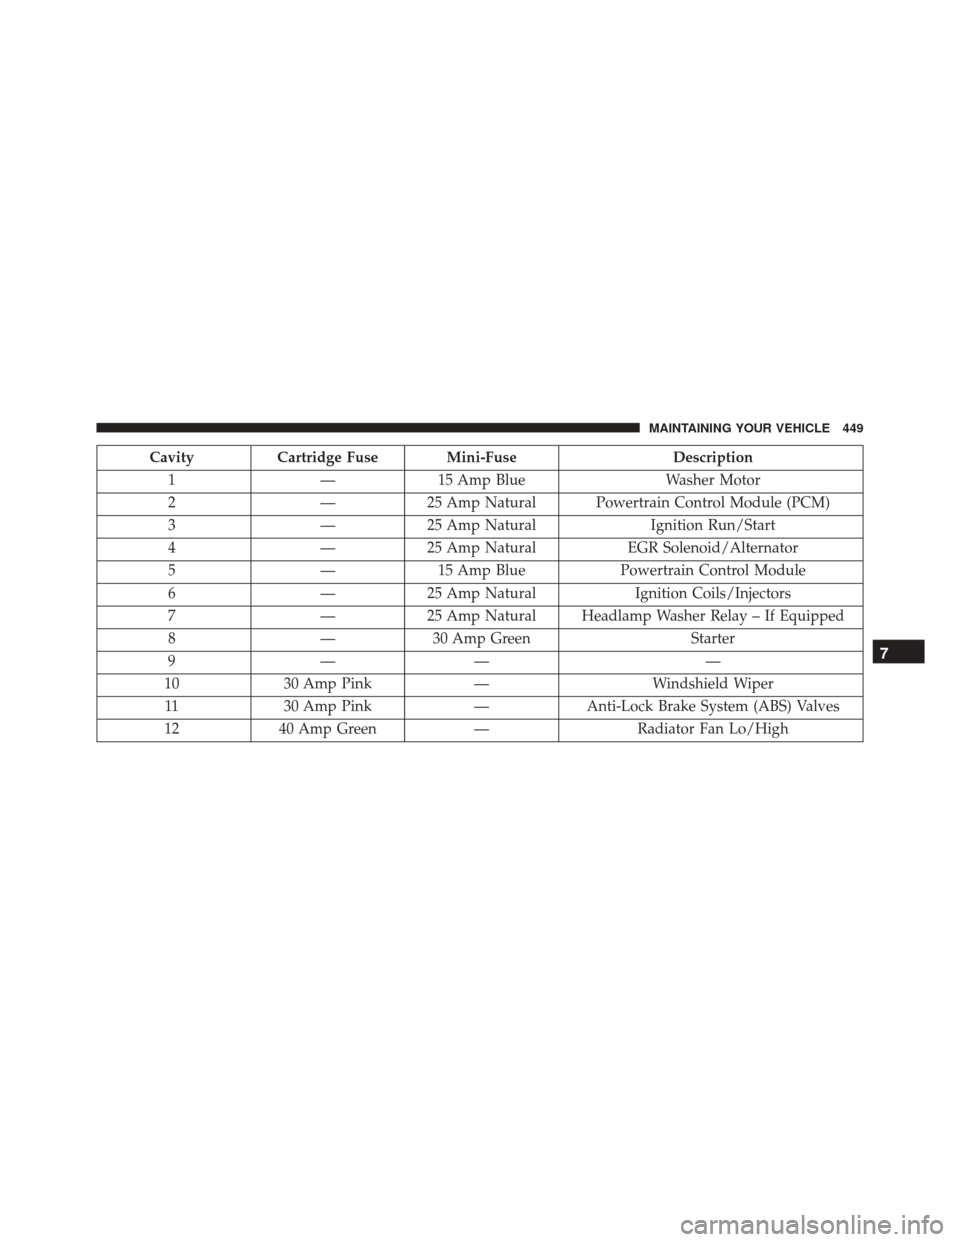 DODGE CHALLENGER SRT 2013 3.G Owners Manual CavityCartridge Fuse Mini-Fuse Description
1 —15 Amp Blue Washer Motor
2 —25 Amp Natural Powertrain Control Module (PCM)
3 —25 Amp Natural Ignition Run/Start
4 —25 Amp Natural EGR Solenoid/Alt